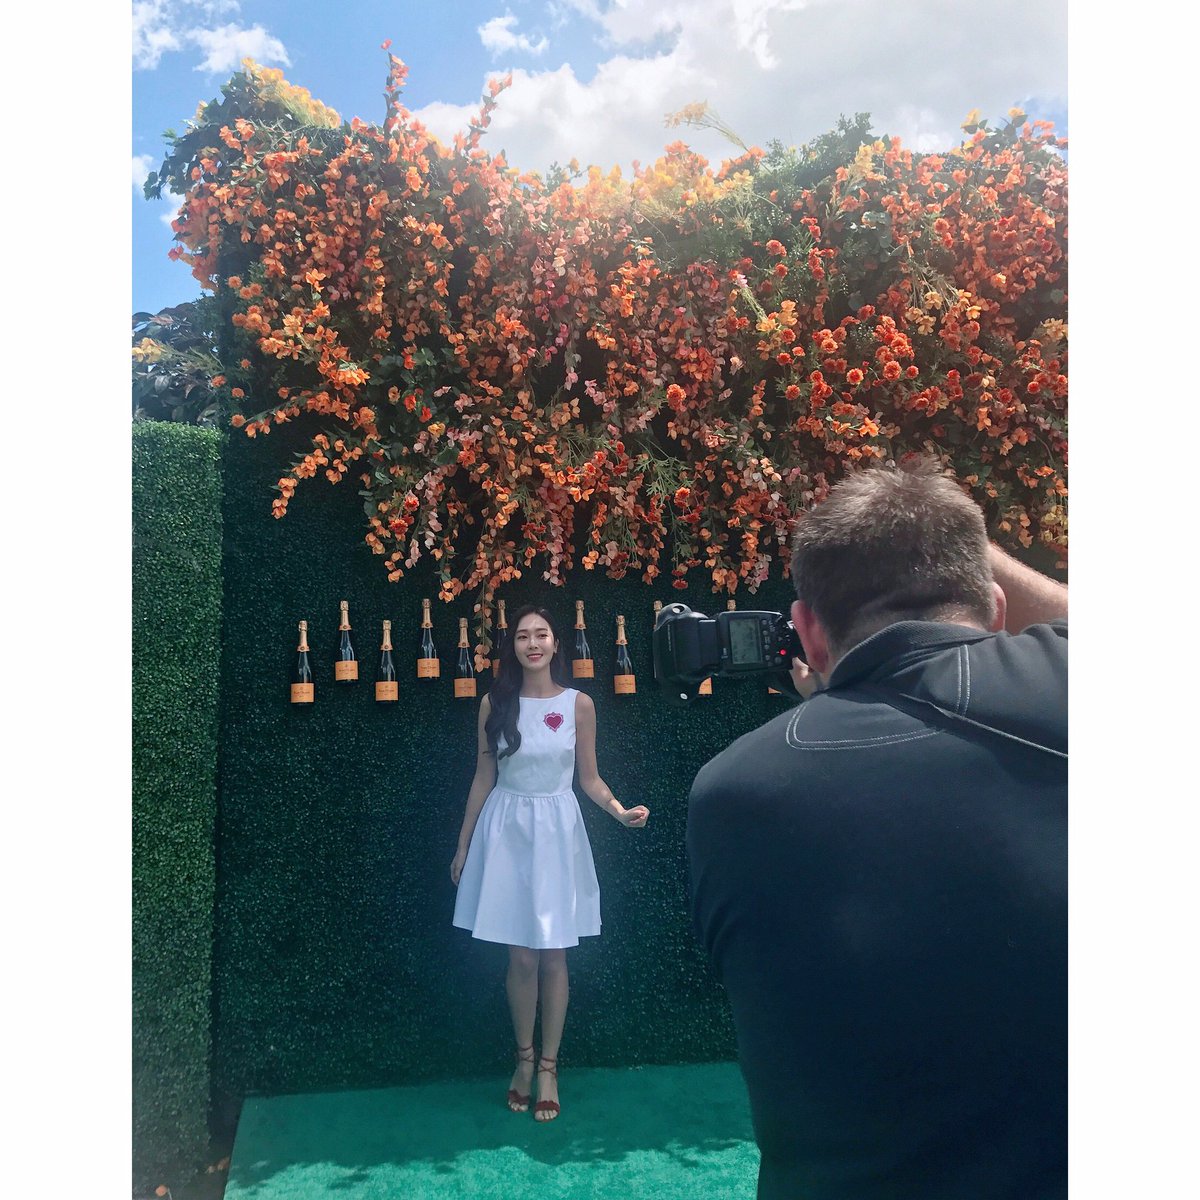 [PIC][04-06-2017]Jessica tham dự sự kiện “The Tenth Annual Veuve Clicquot Polo Classic Arrivals” tại Liberty State Park, New York vào hôm nay DBdKT1HUMAAlKSb